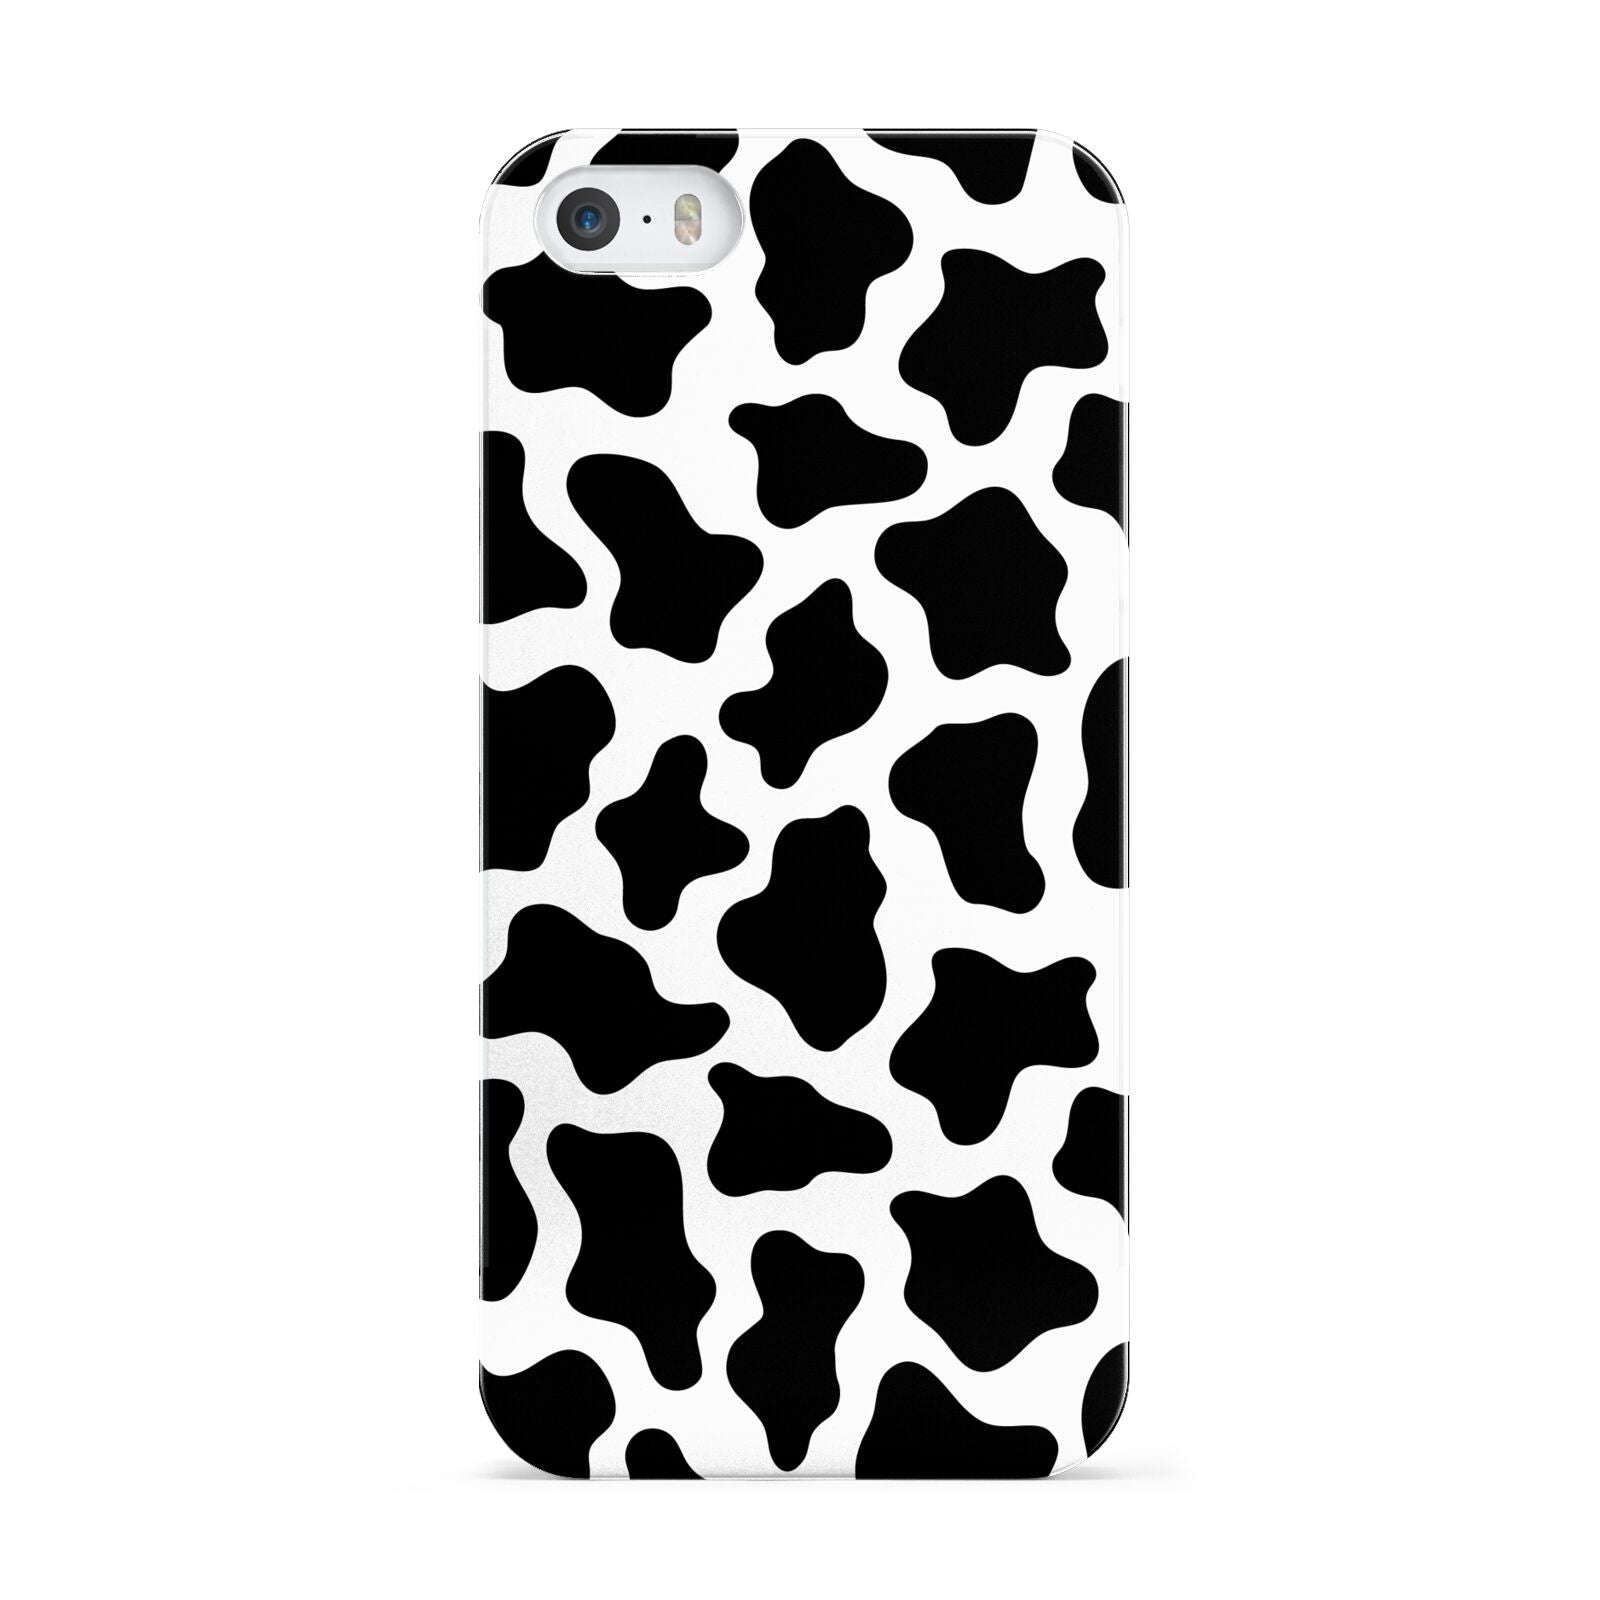 Cow Print Apple iPhone 5 Case